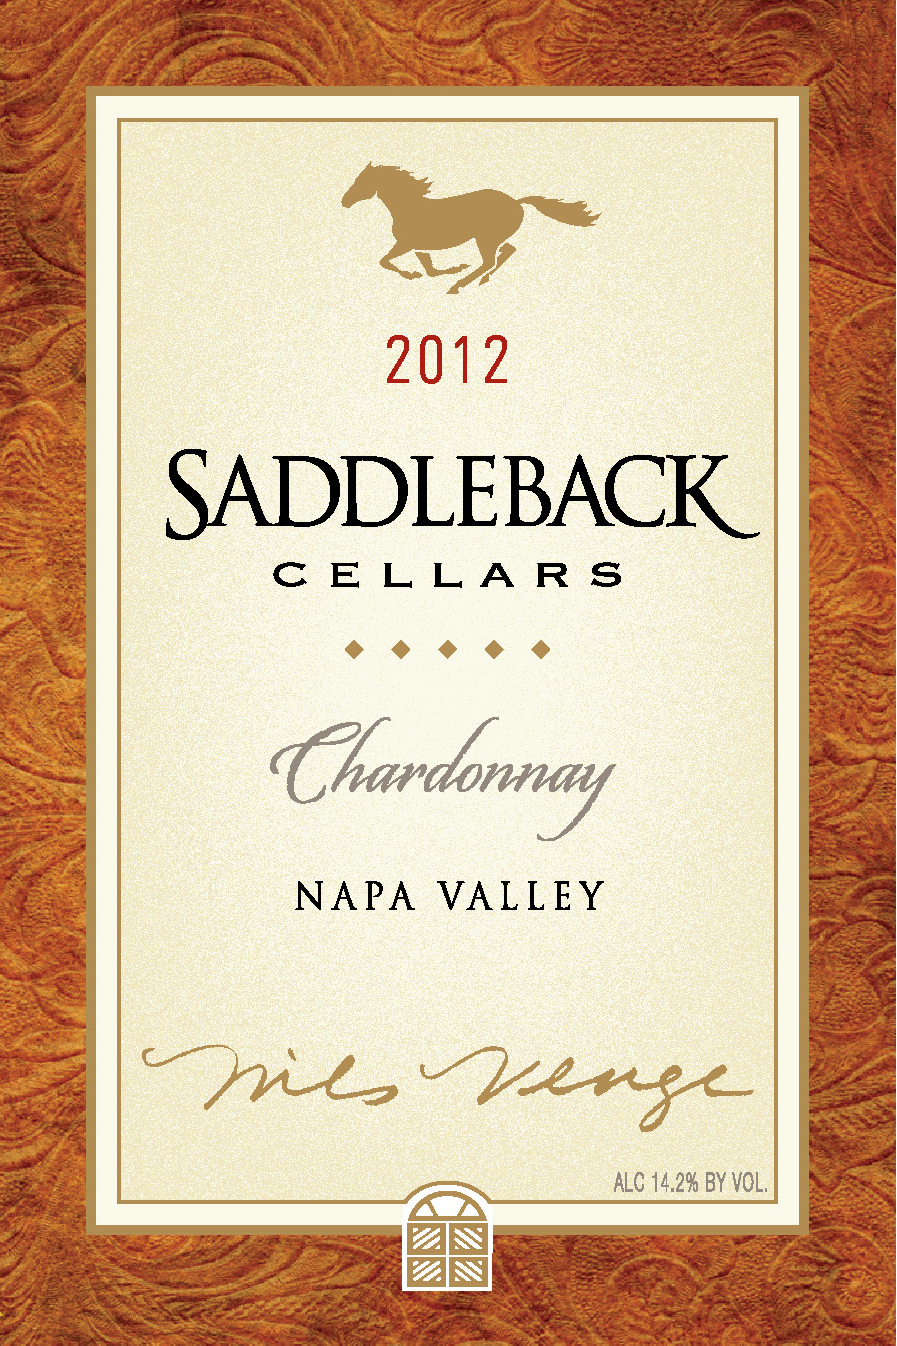 2012 Saddleback Cellars Chardonnay Napa - click image for full description